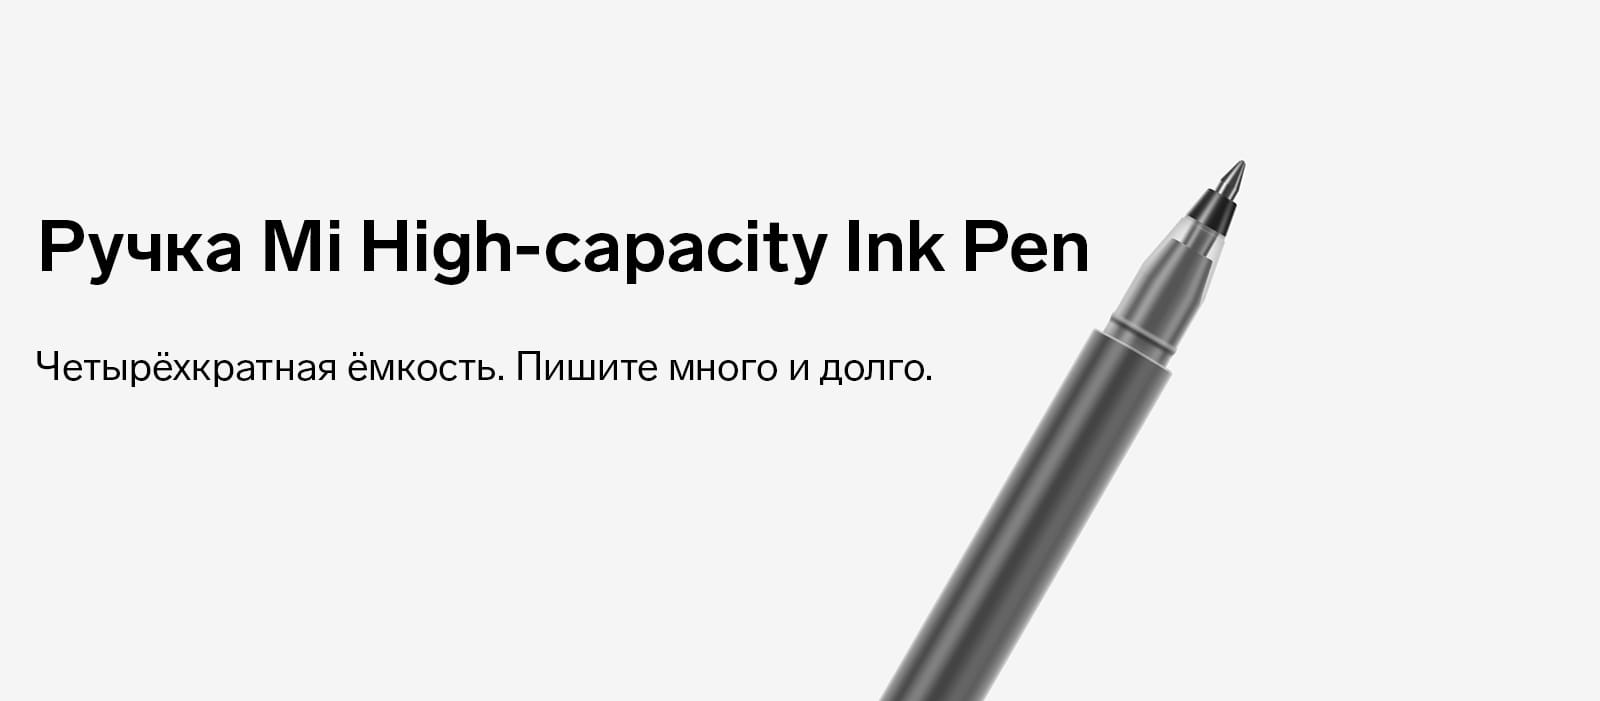  Mi High-capacity Ink Pen